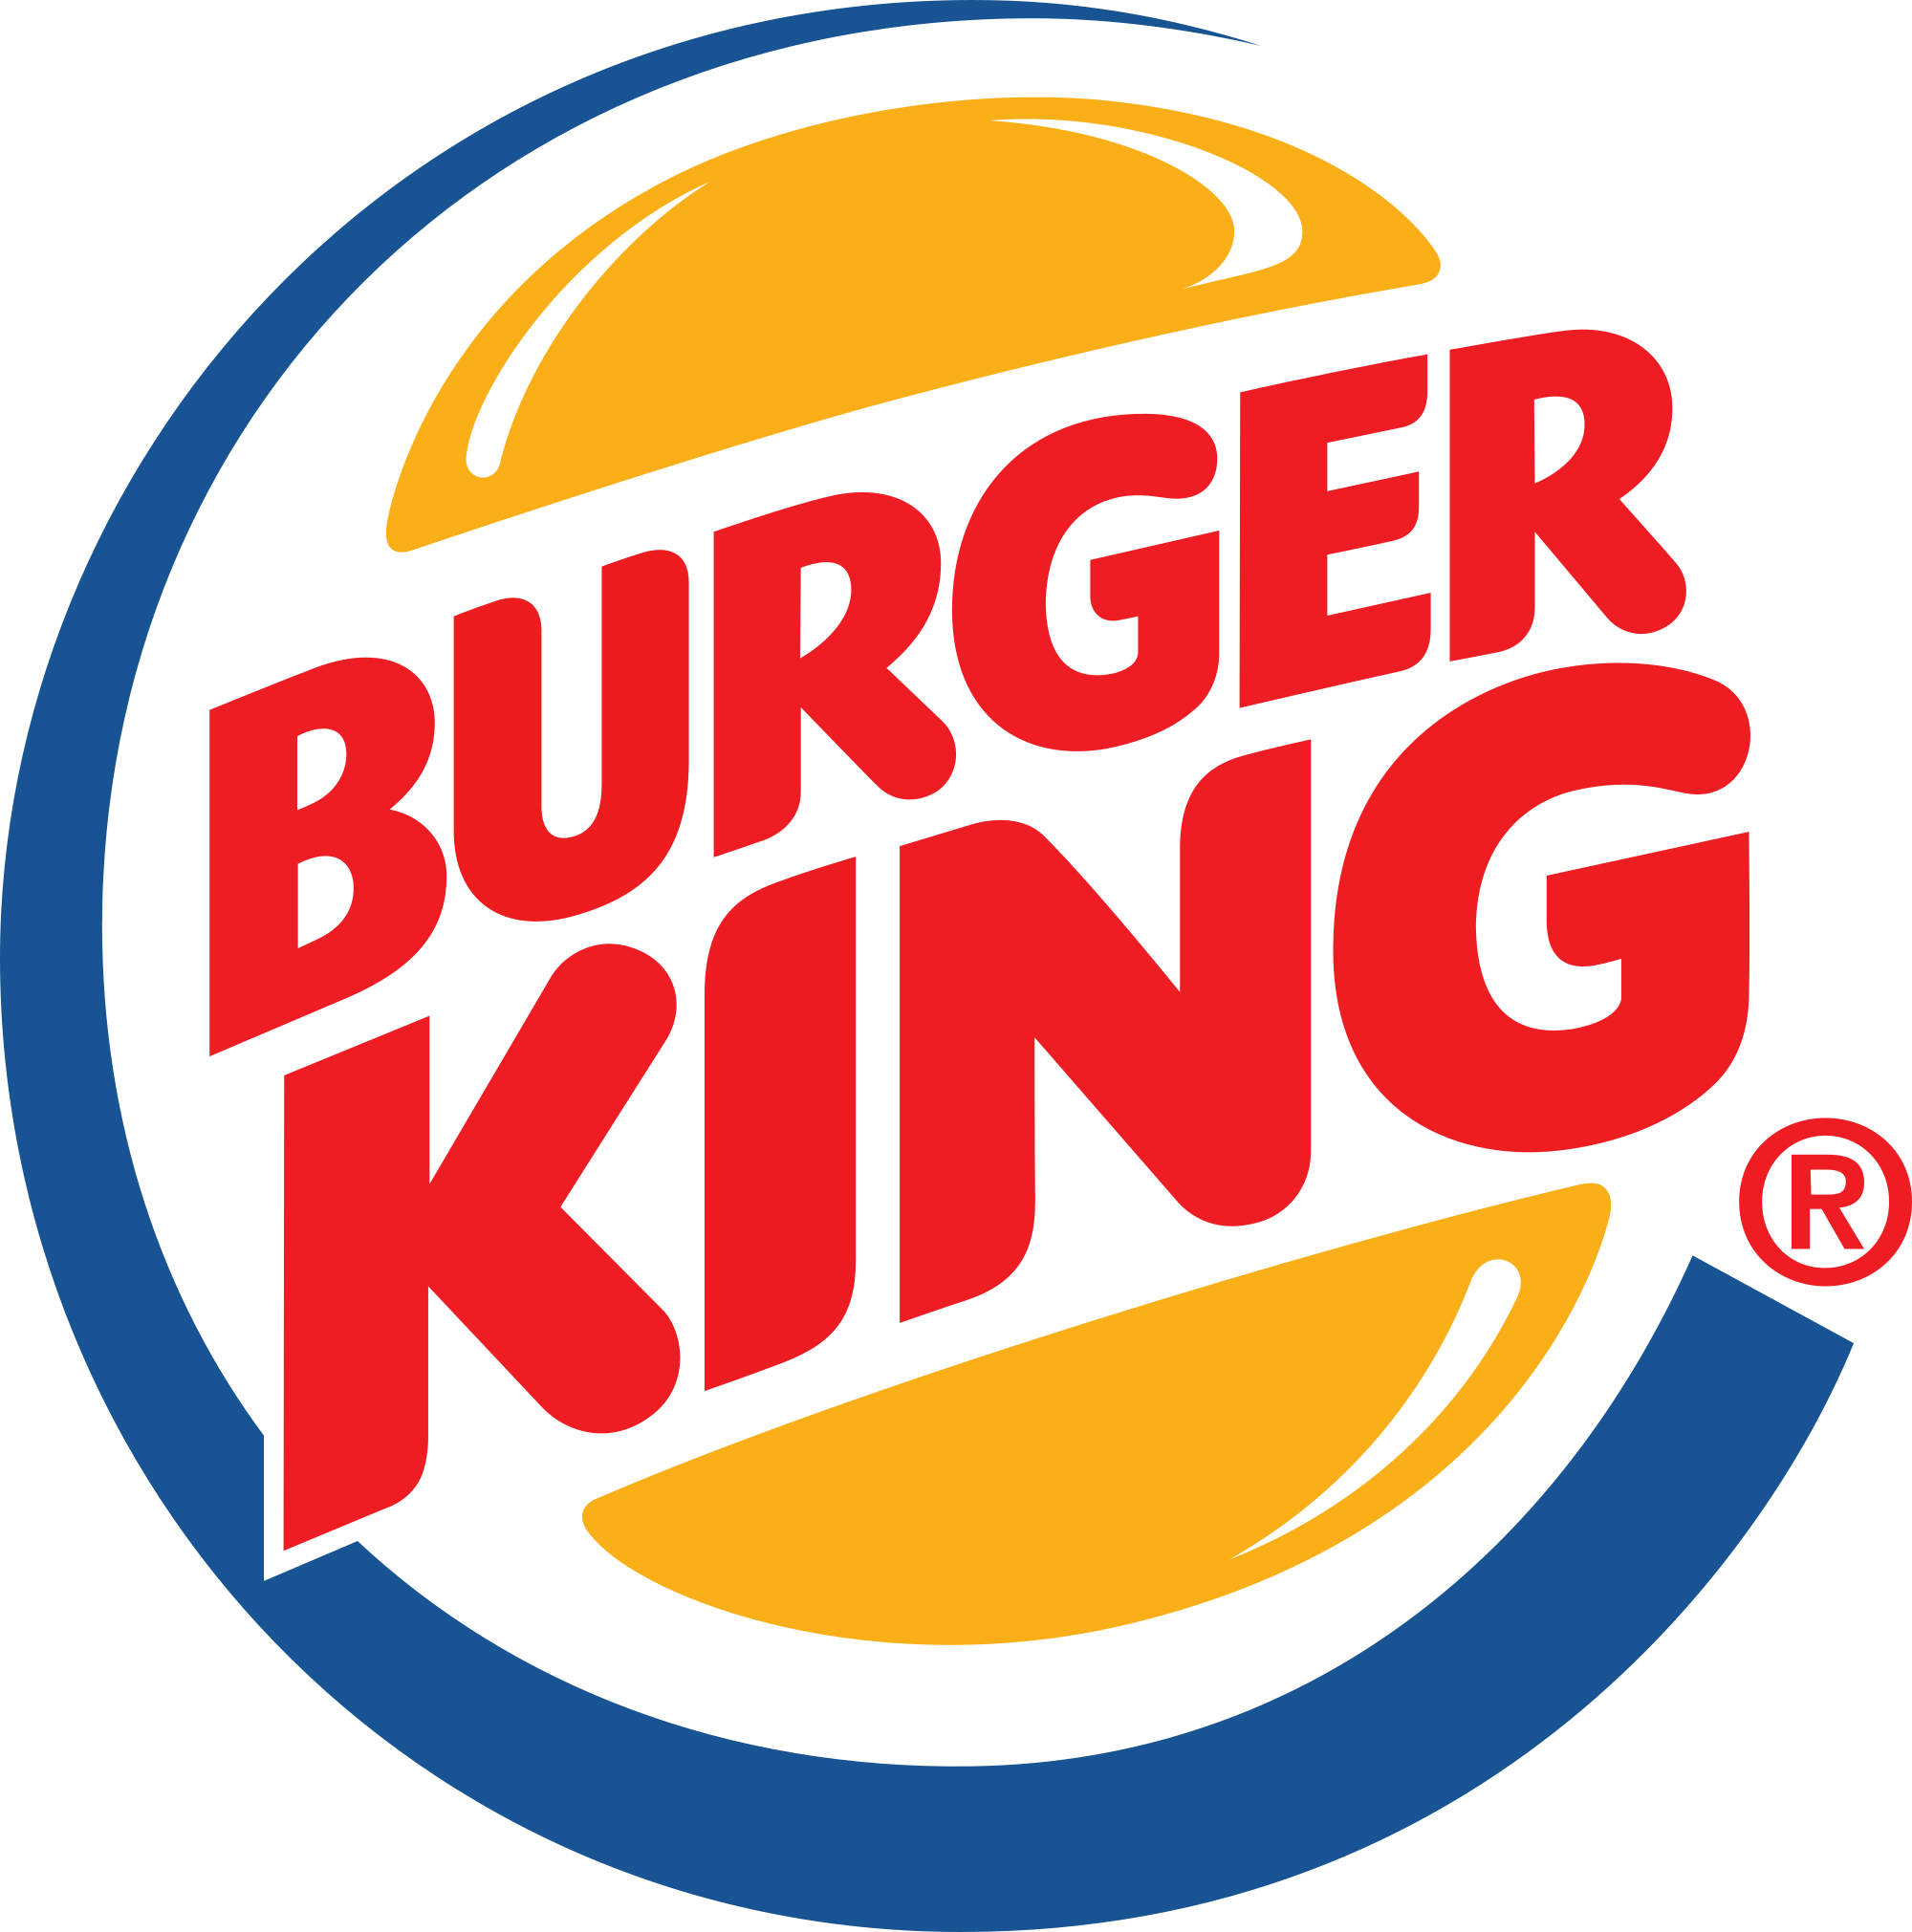 Burger King Arabic logo.svg.p